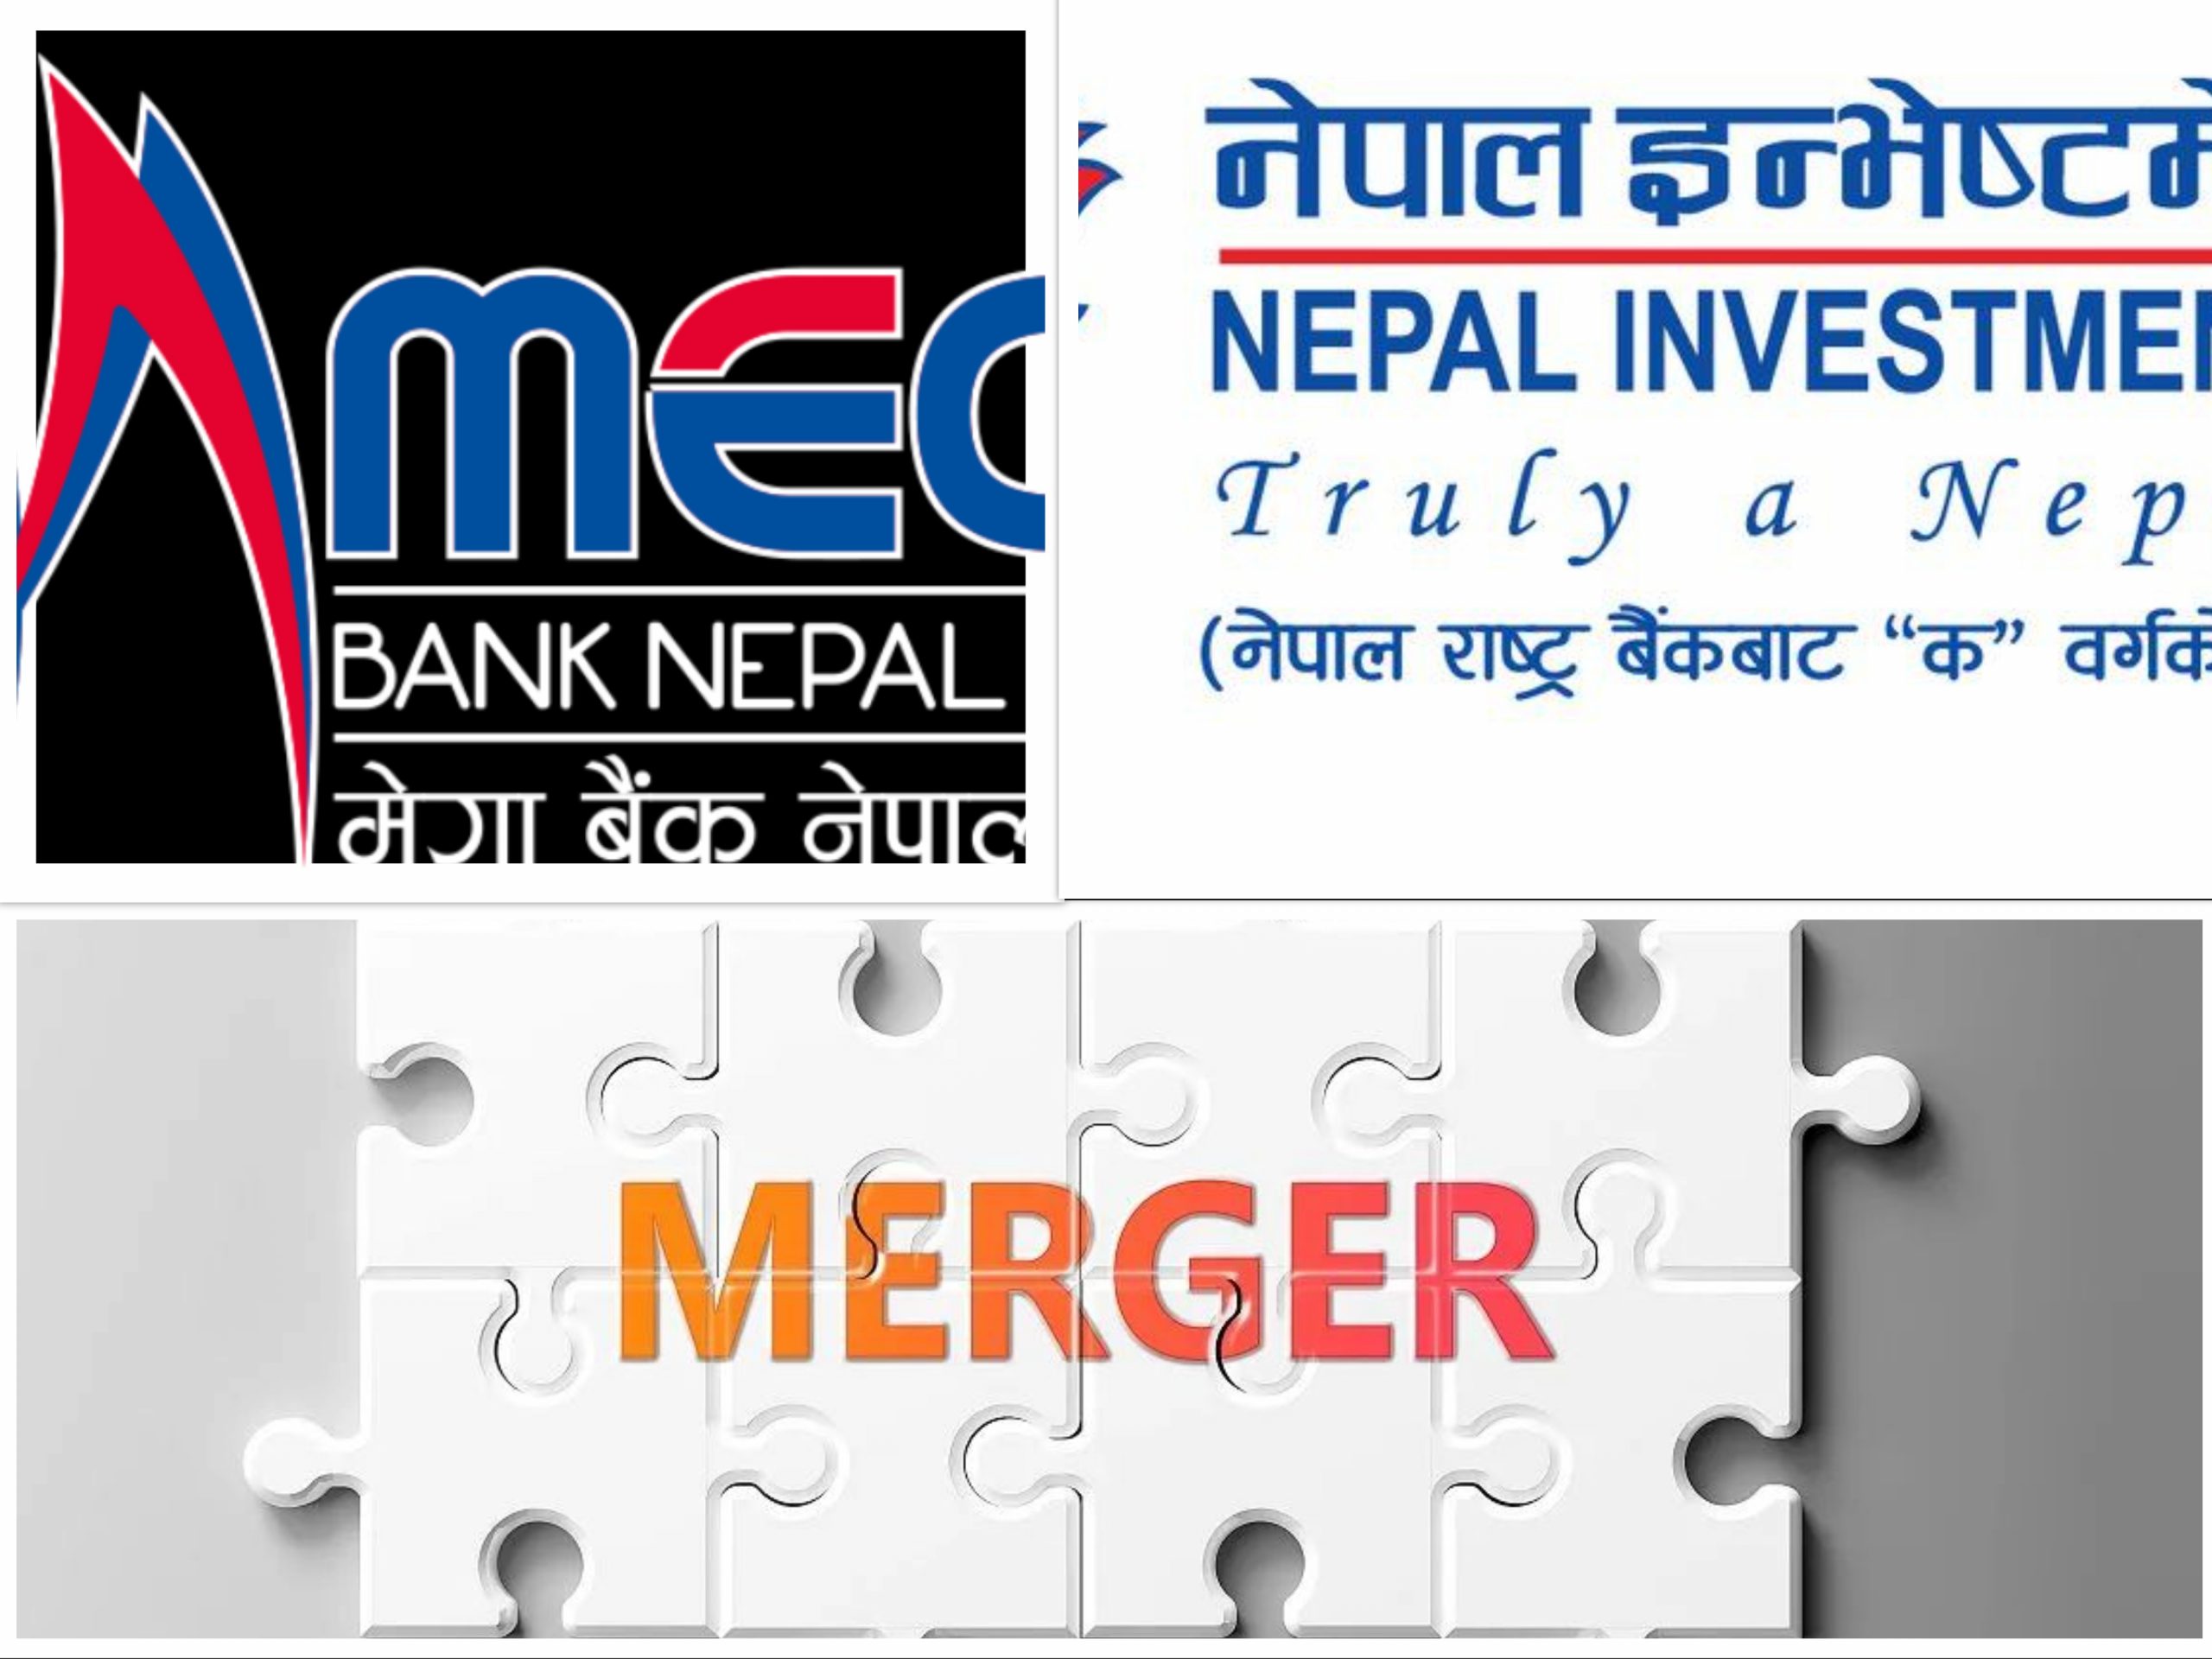 NIBL, Mega Bank preparing to ink merger agreement today evening